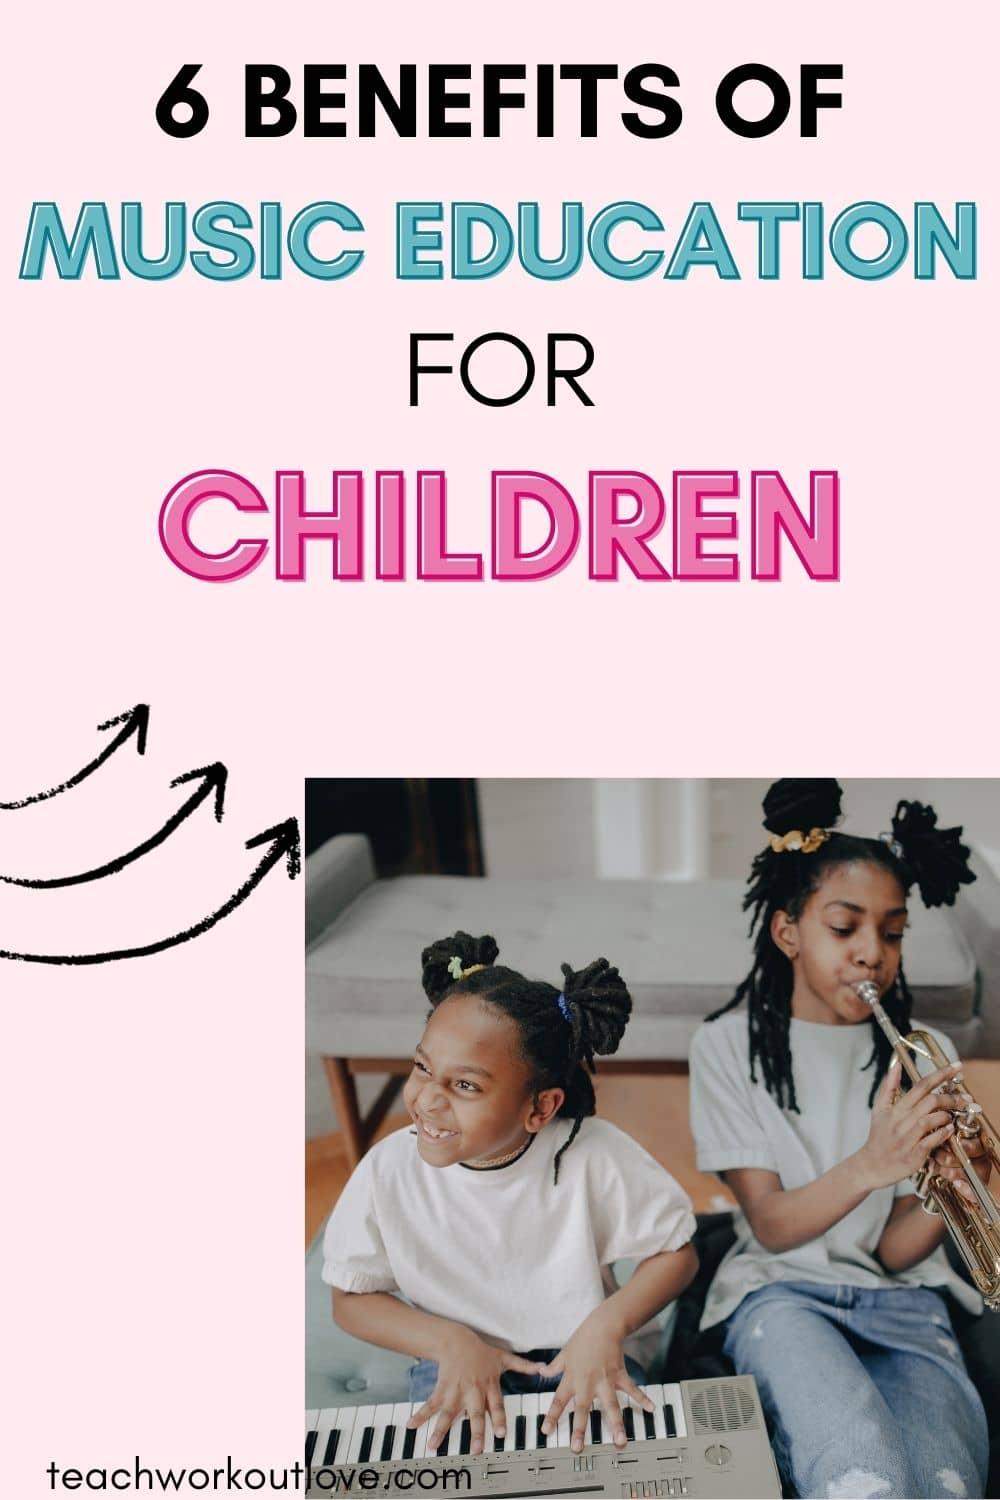 Benefits of Music Education For Children